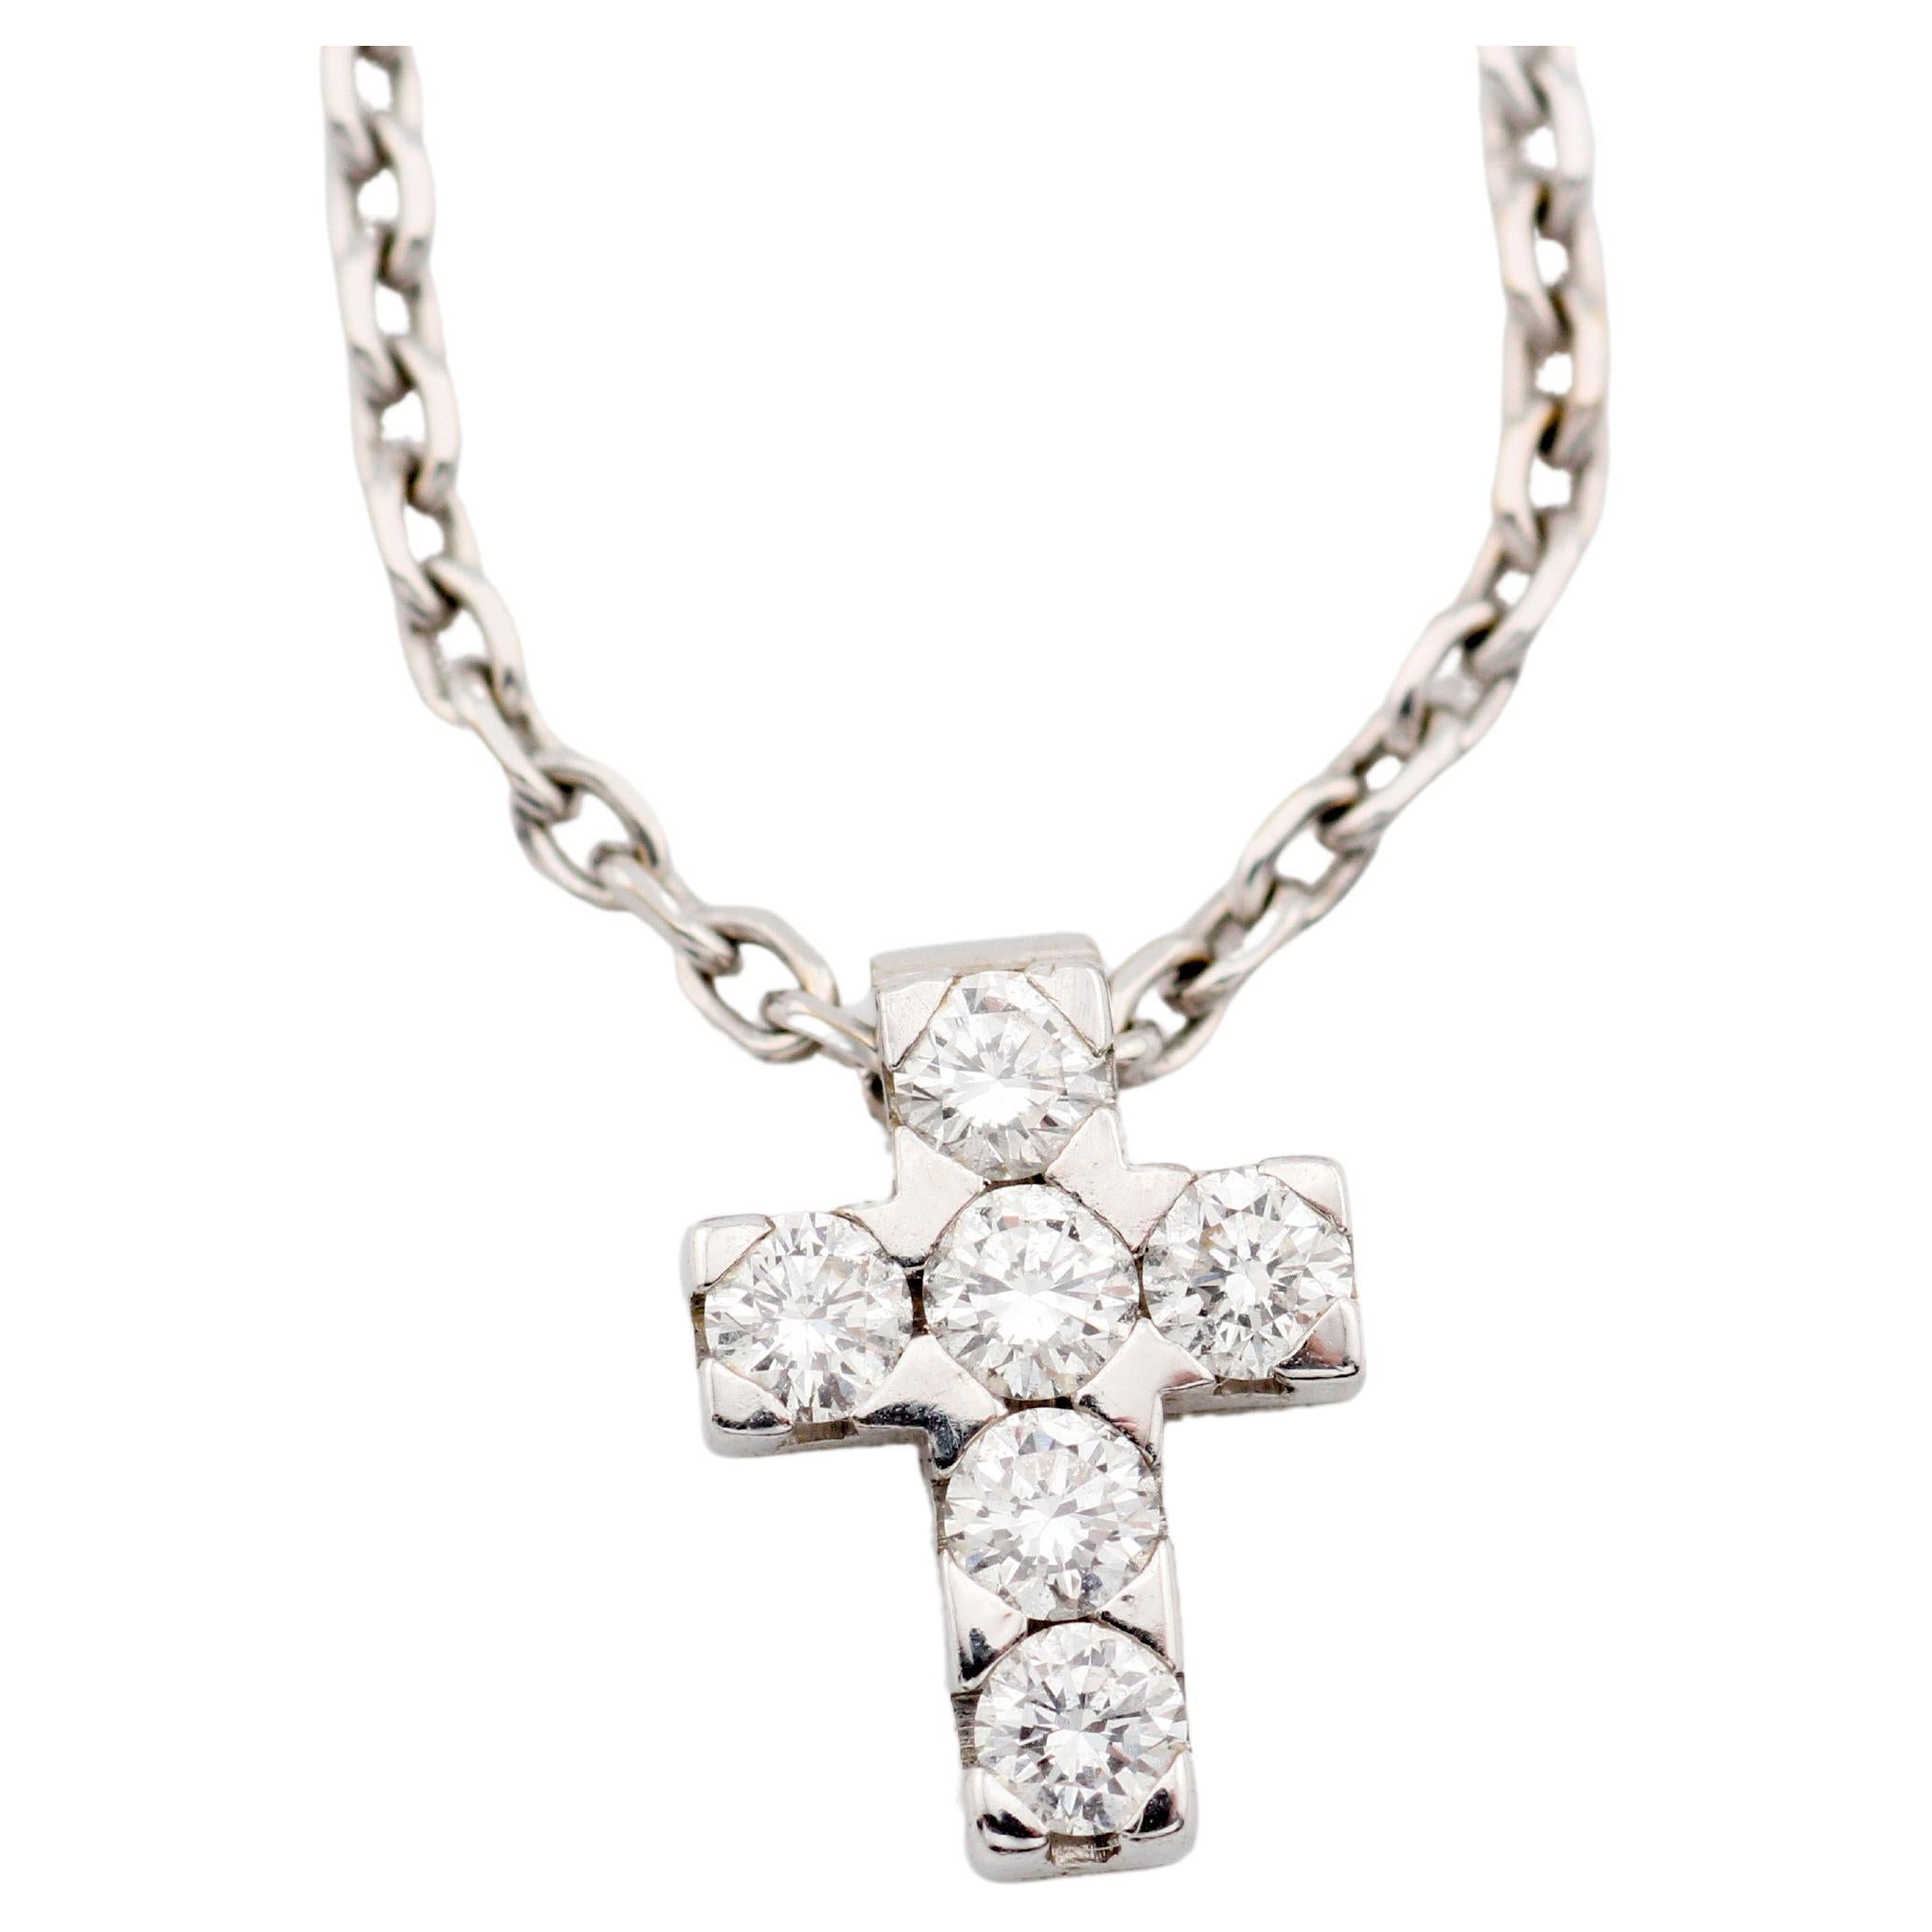 Van Cleef & Arpels, collier pendentif croix en or blanc 18 carats et diamants